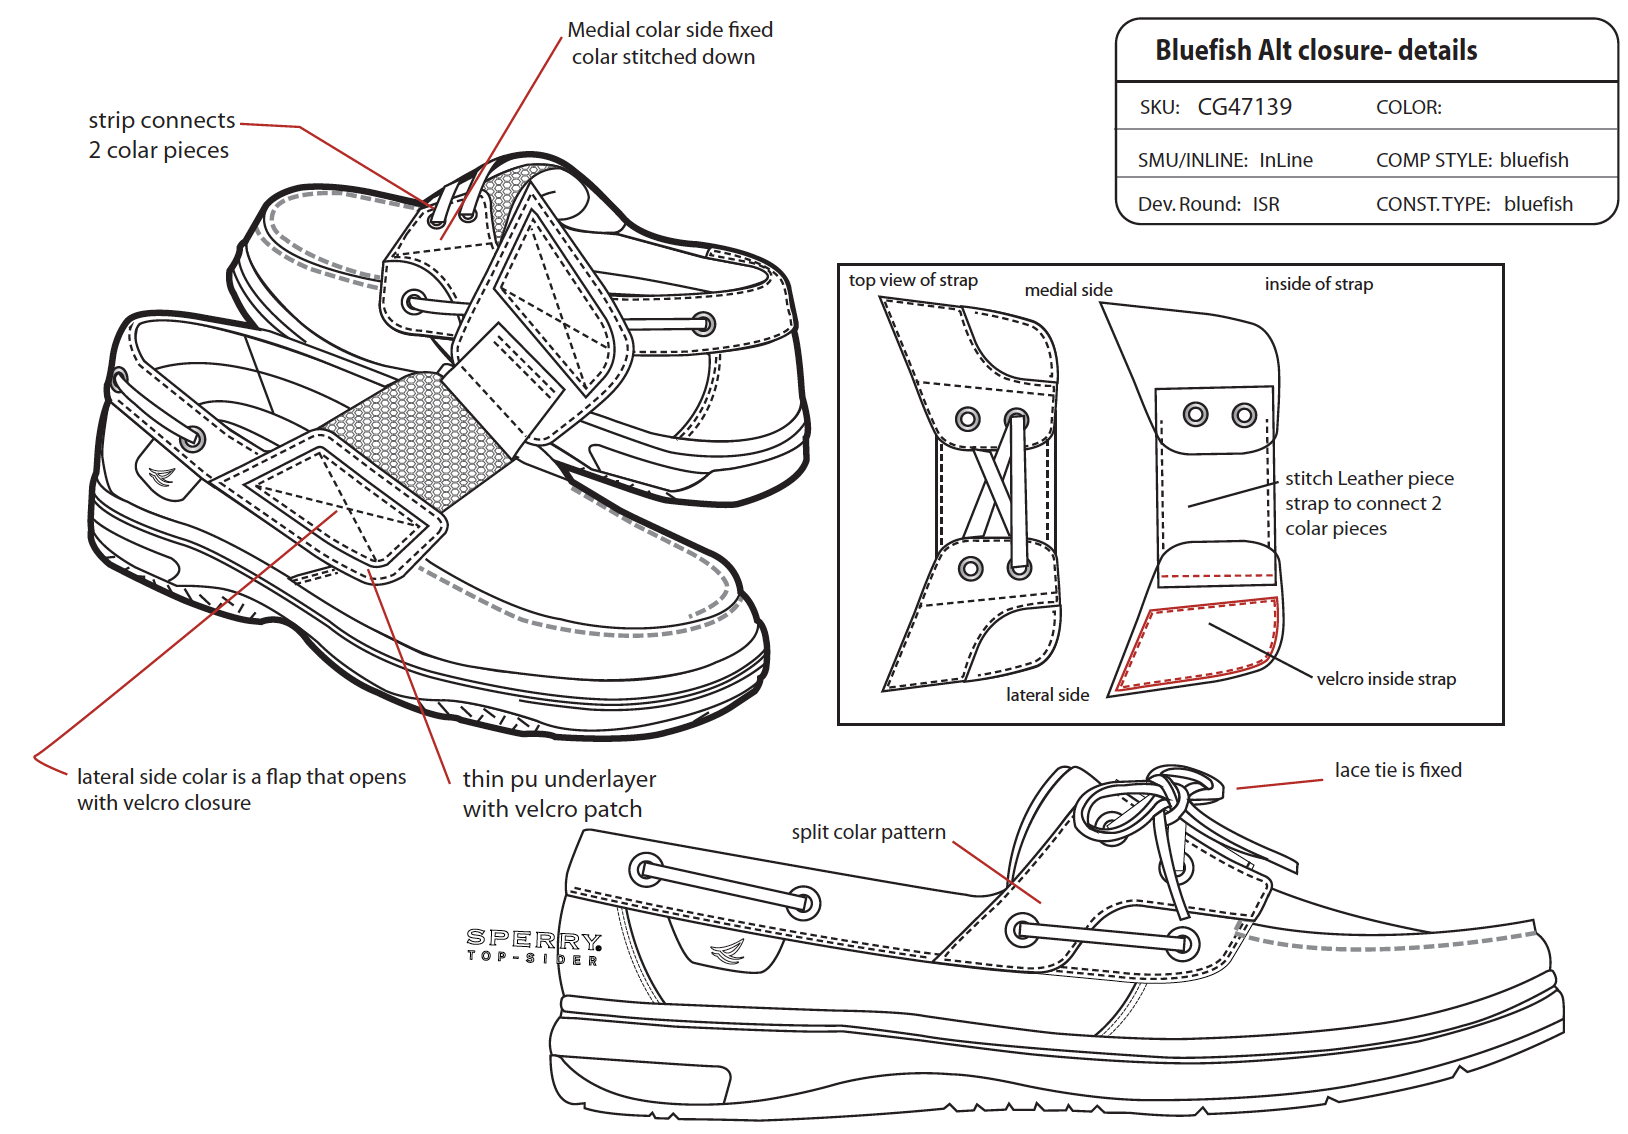 Dawn Phillips Product designer - Footwear Design